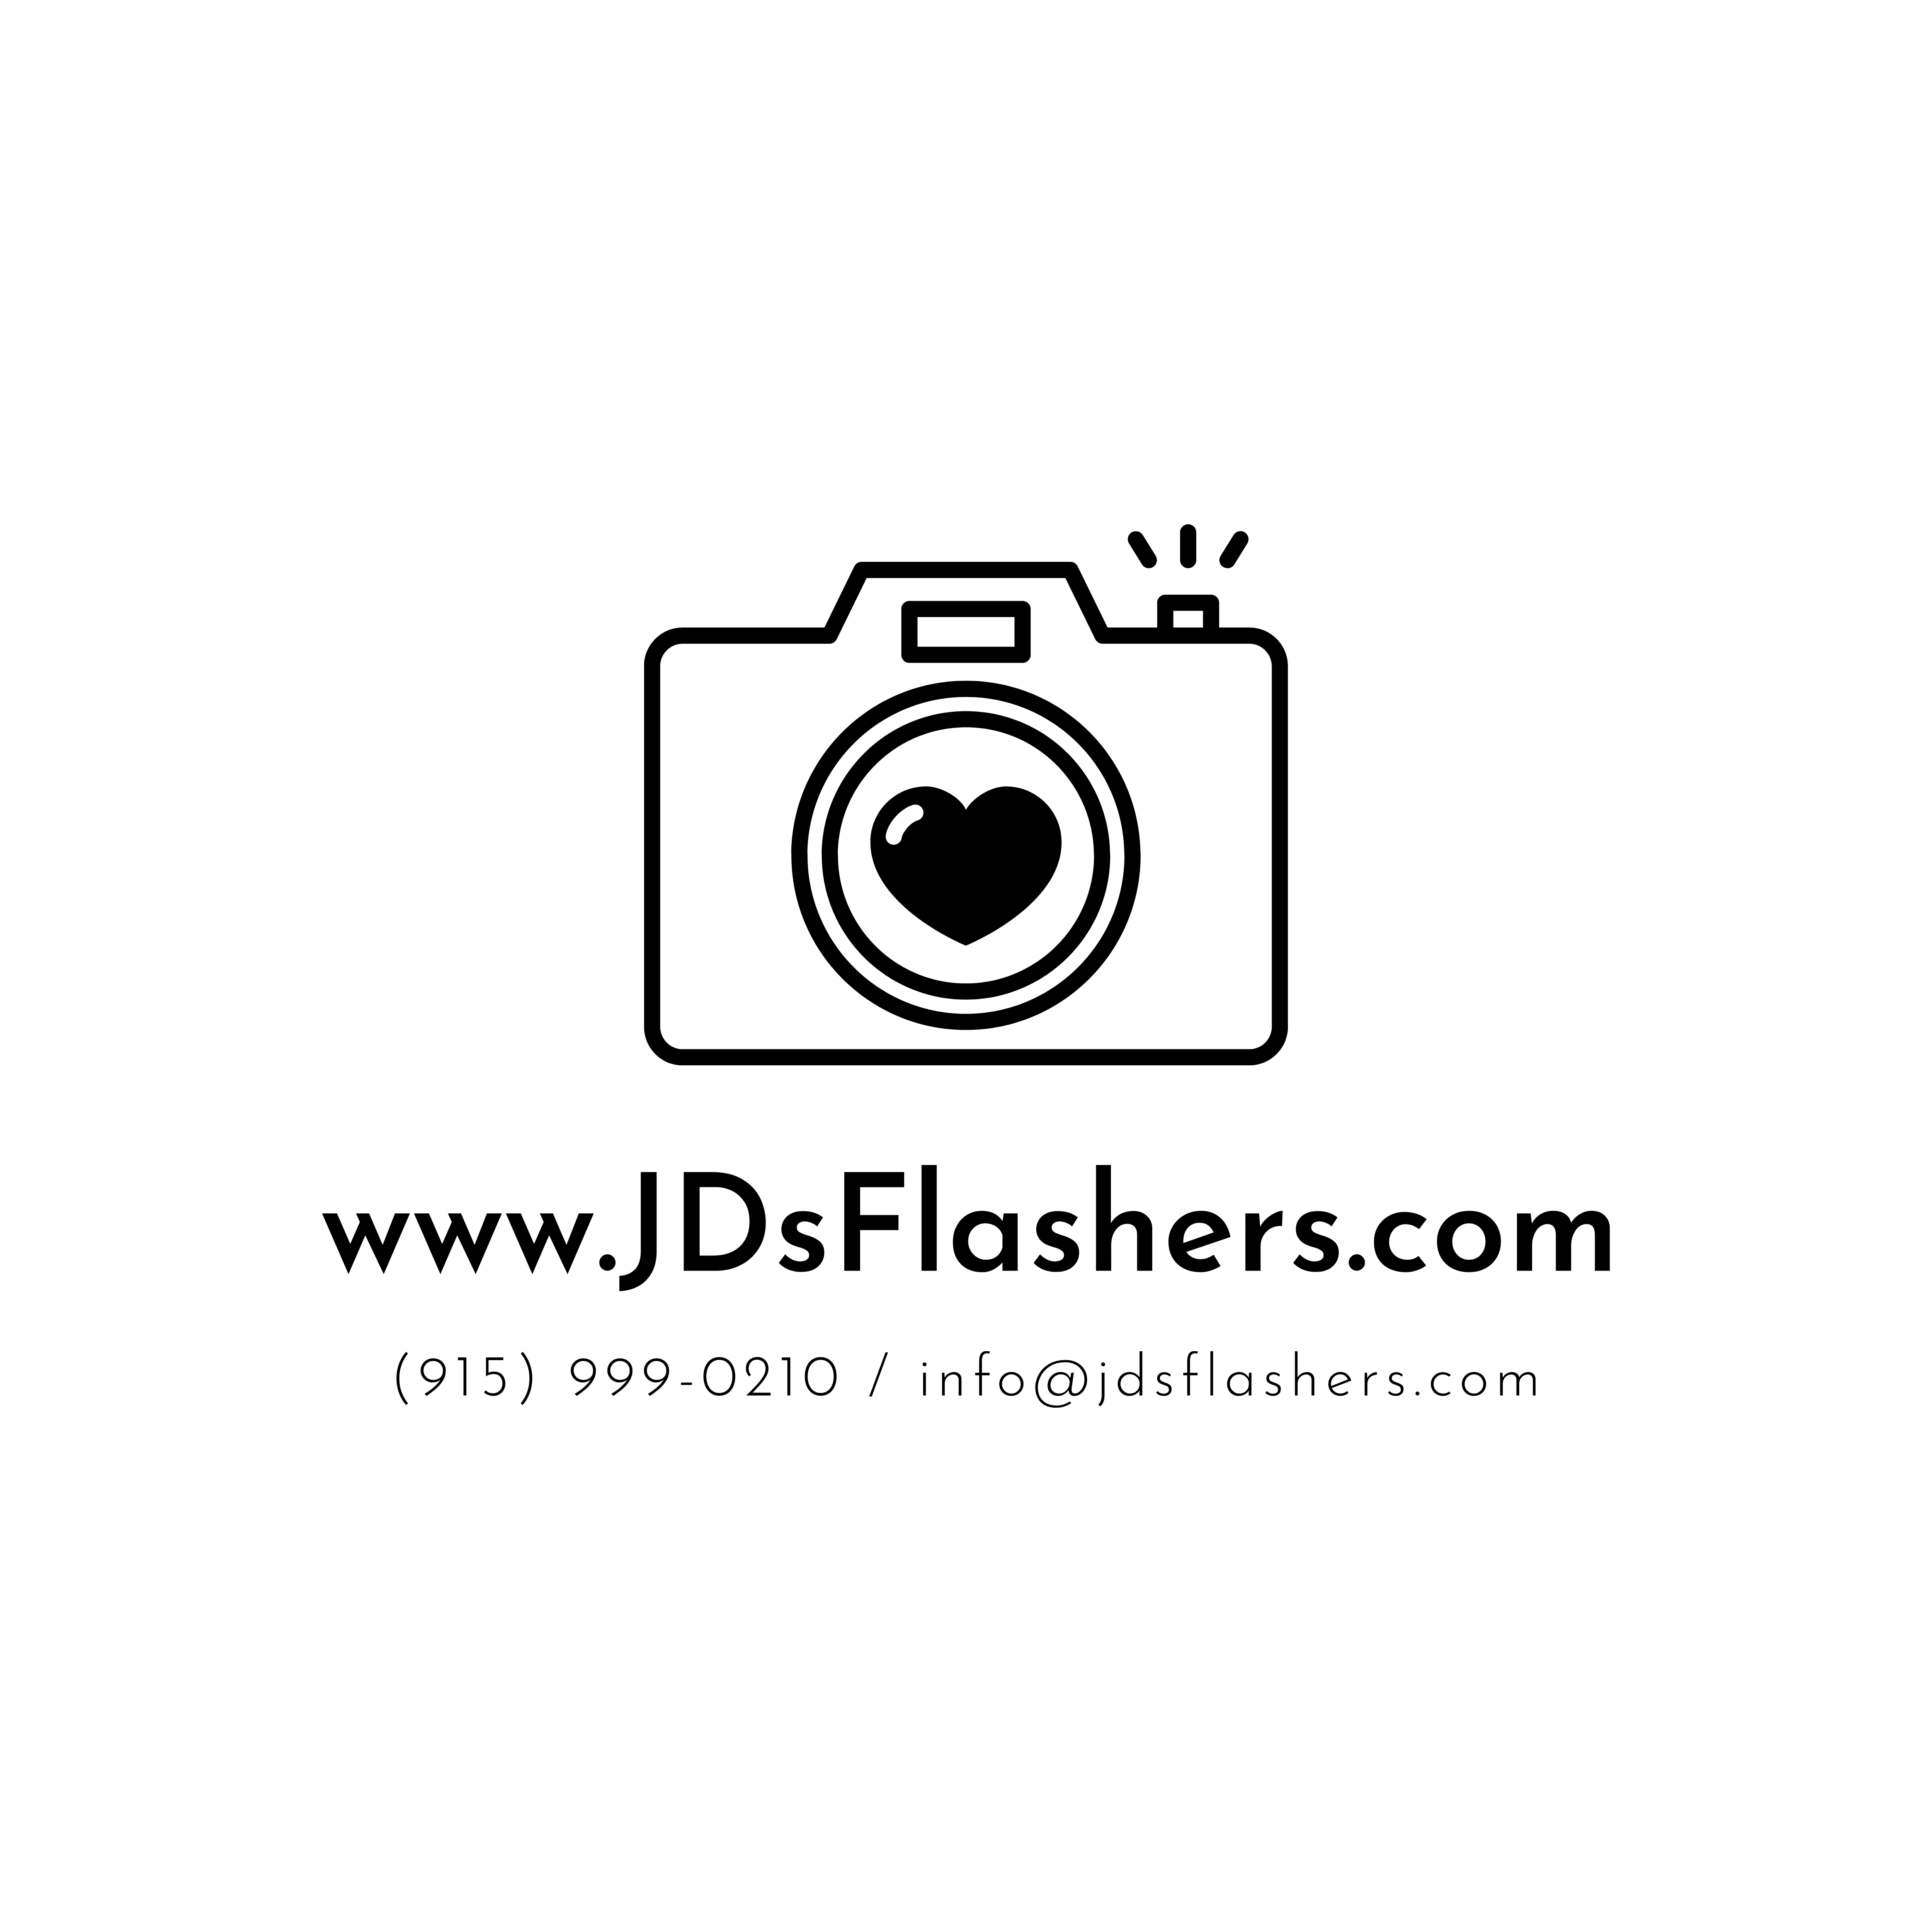 JD's Flashers Logo